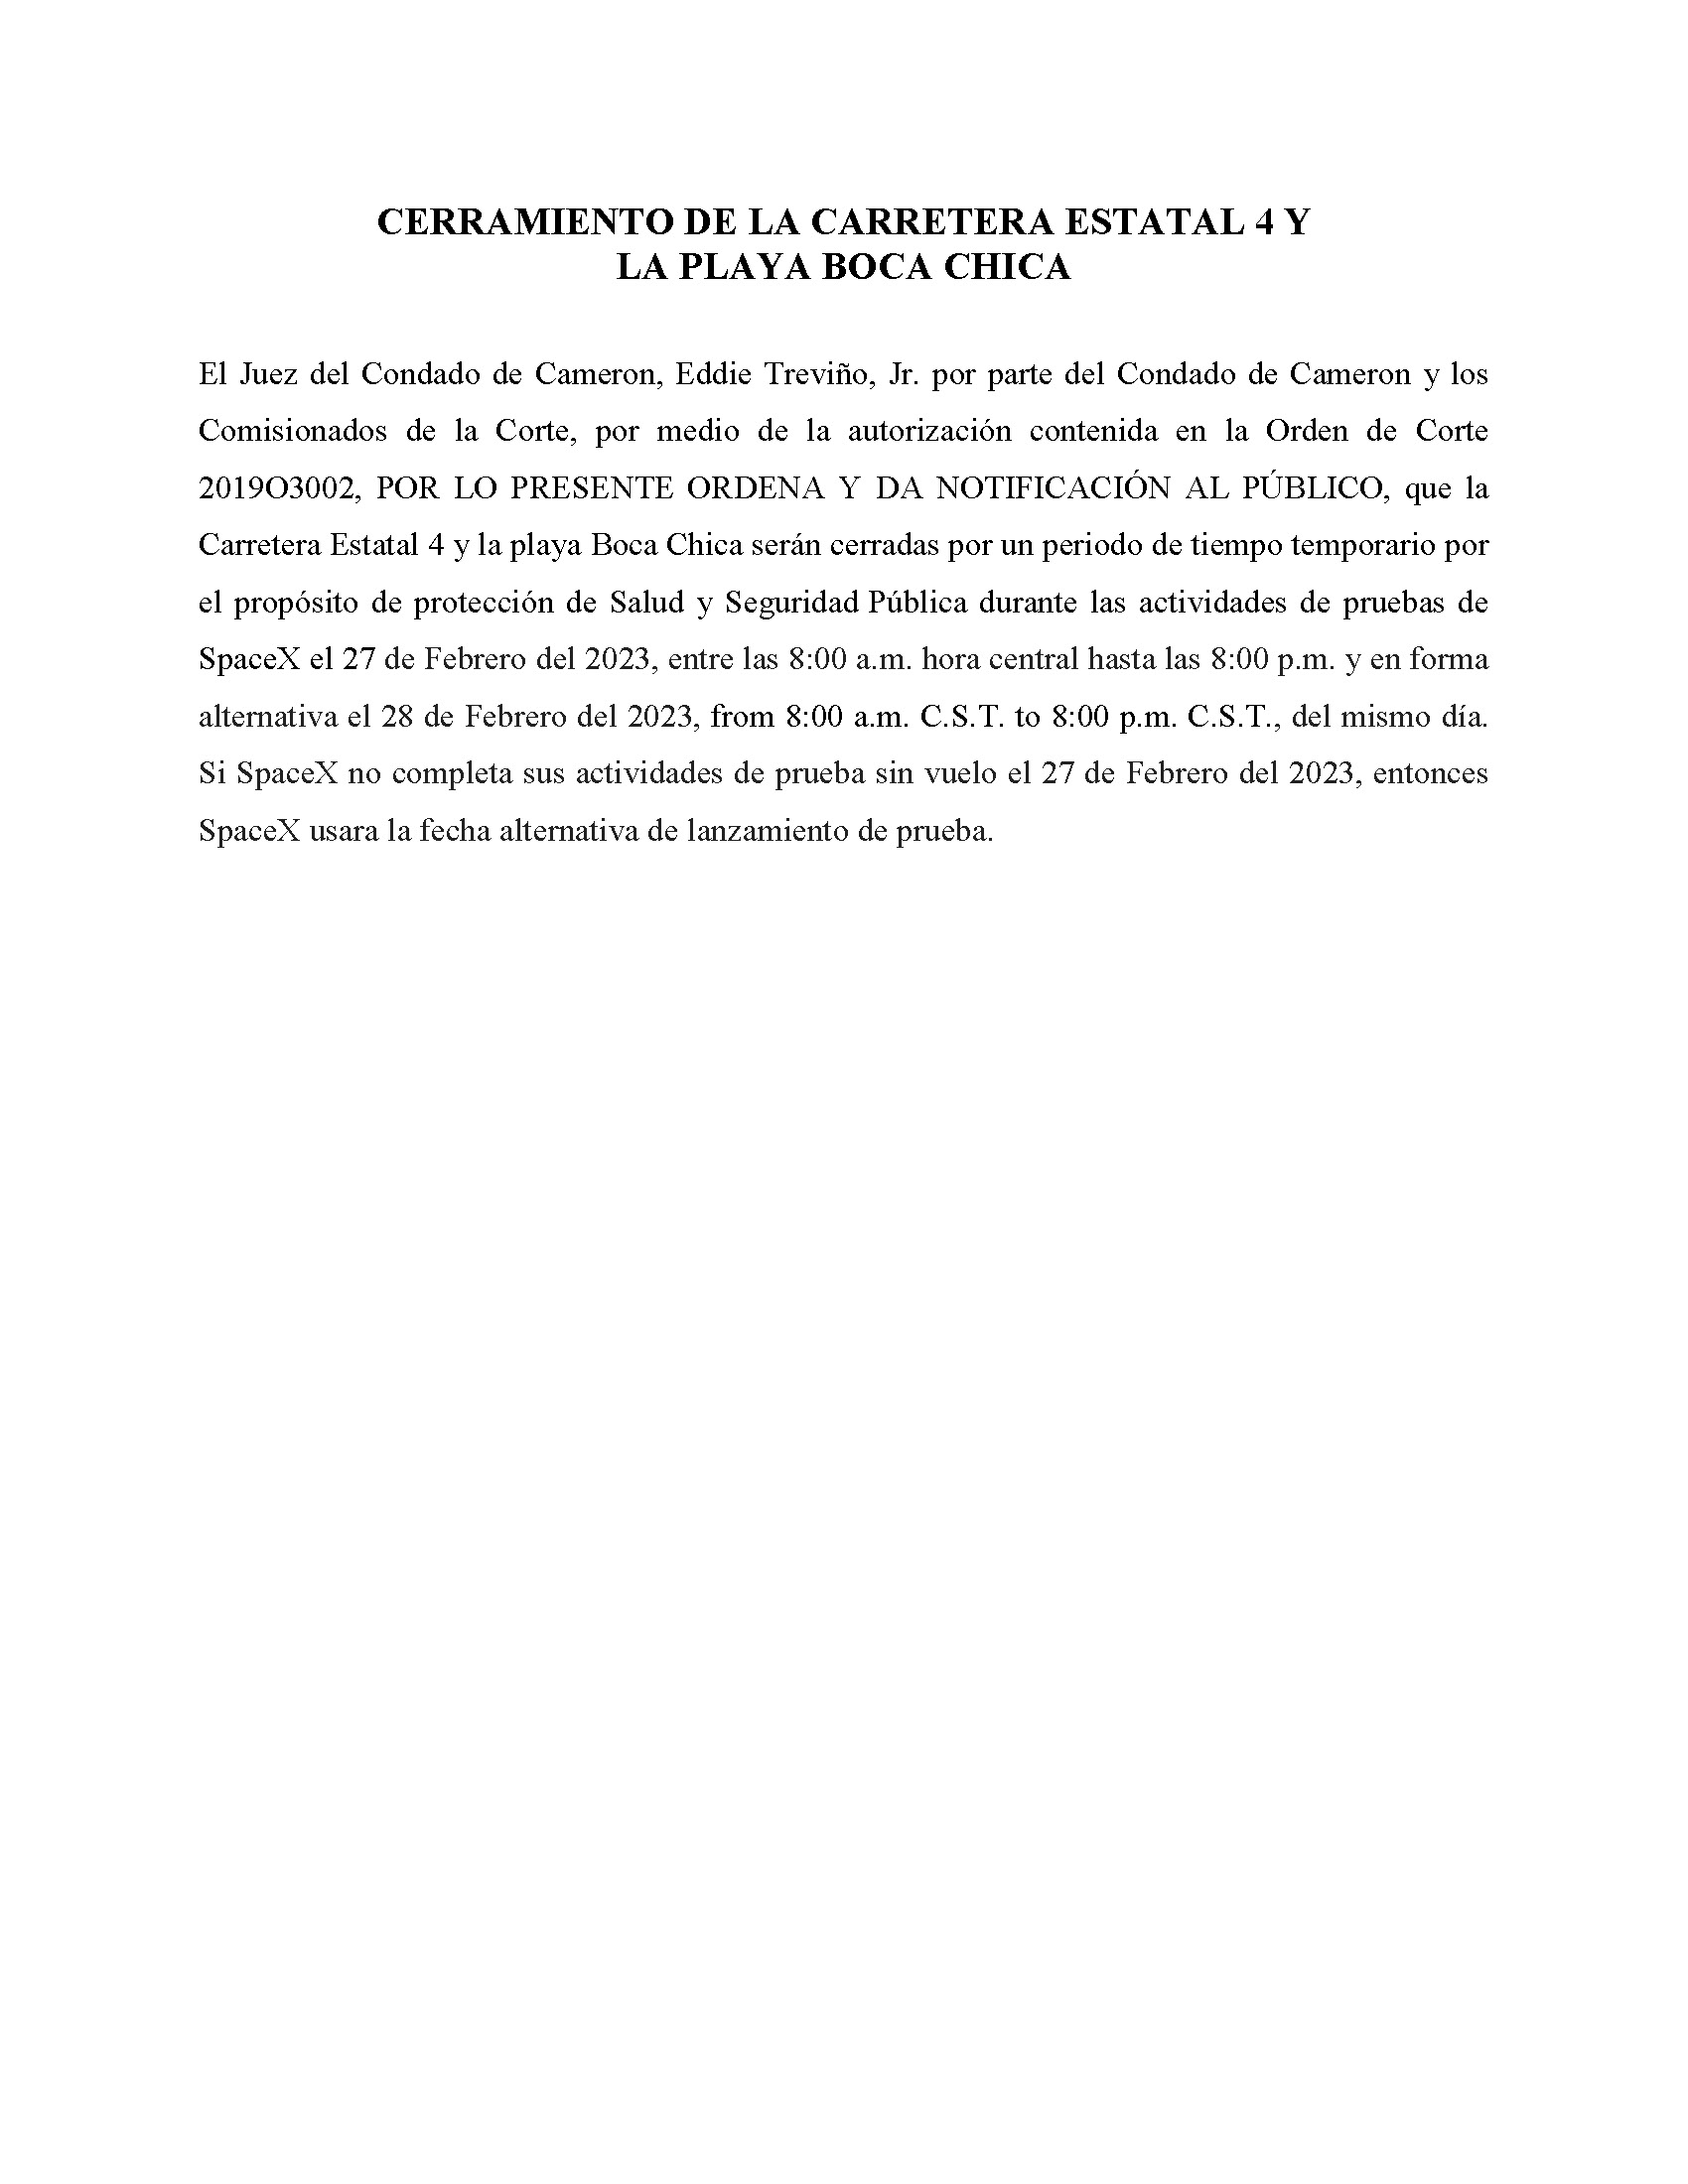 ORDER.CLOSURE OF HIGHWAY 4 Y LA PLAYA BOCA CHICA.SPANISH.02.27.23